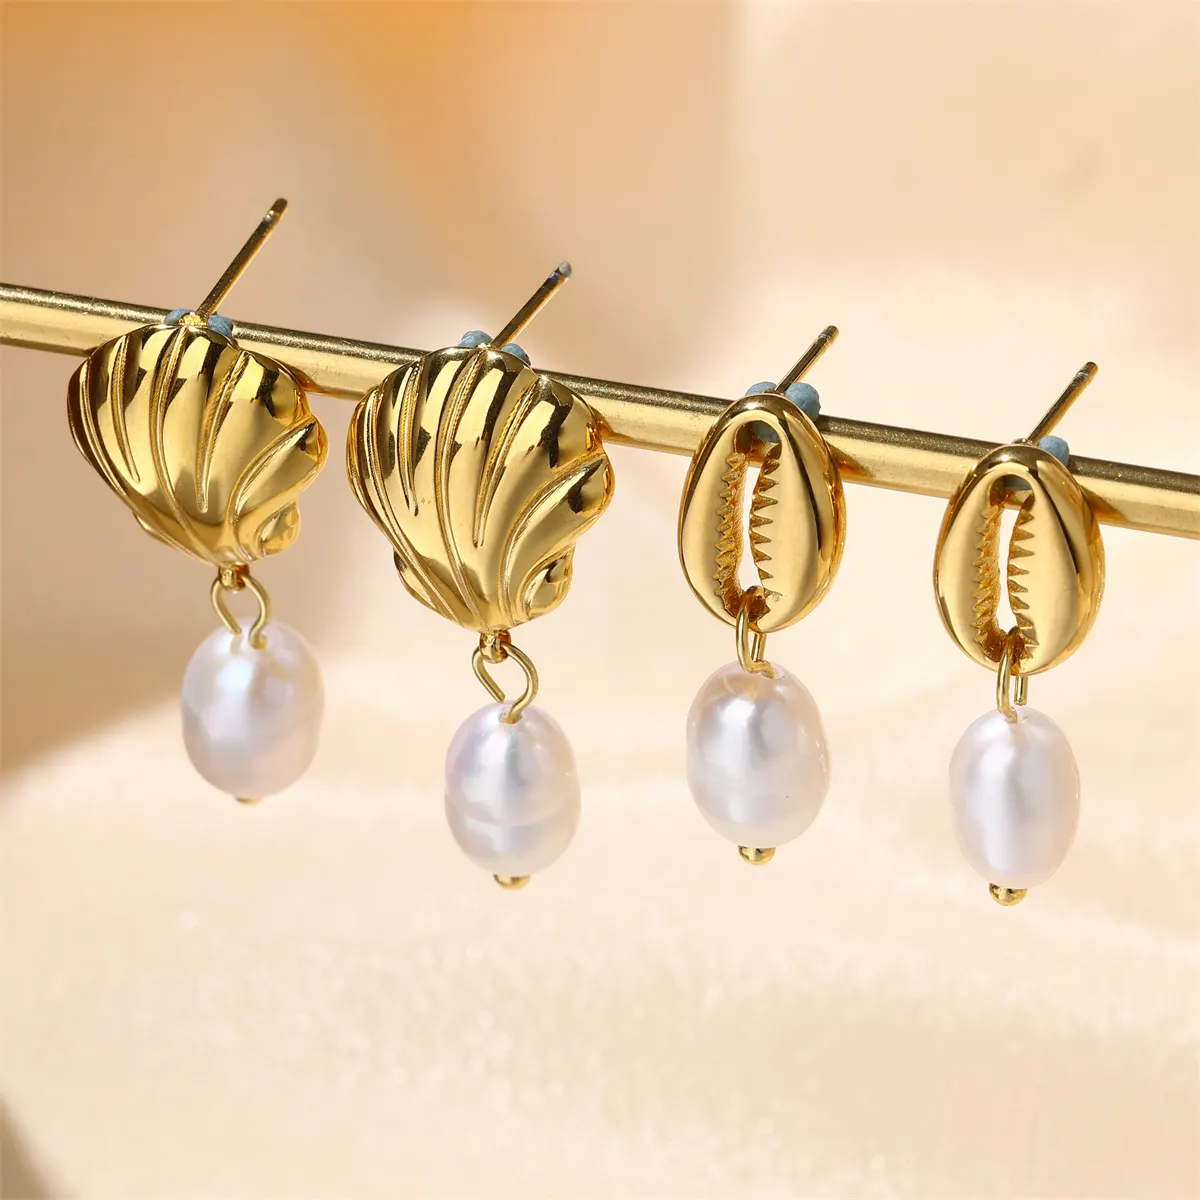 Vintage Freshwater Pearl 18K Gold Plated Stainless Steel Earrings Shell Dangle Earrings Jewelry For Women